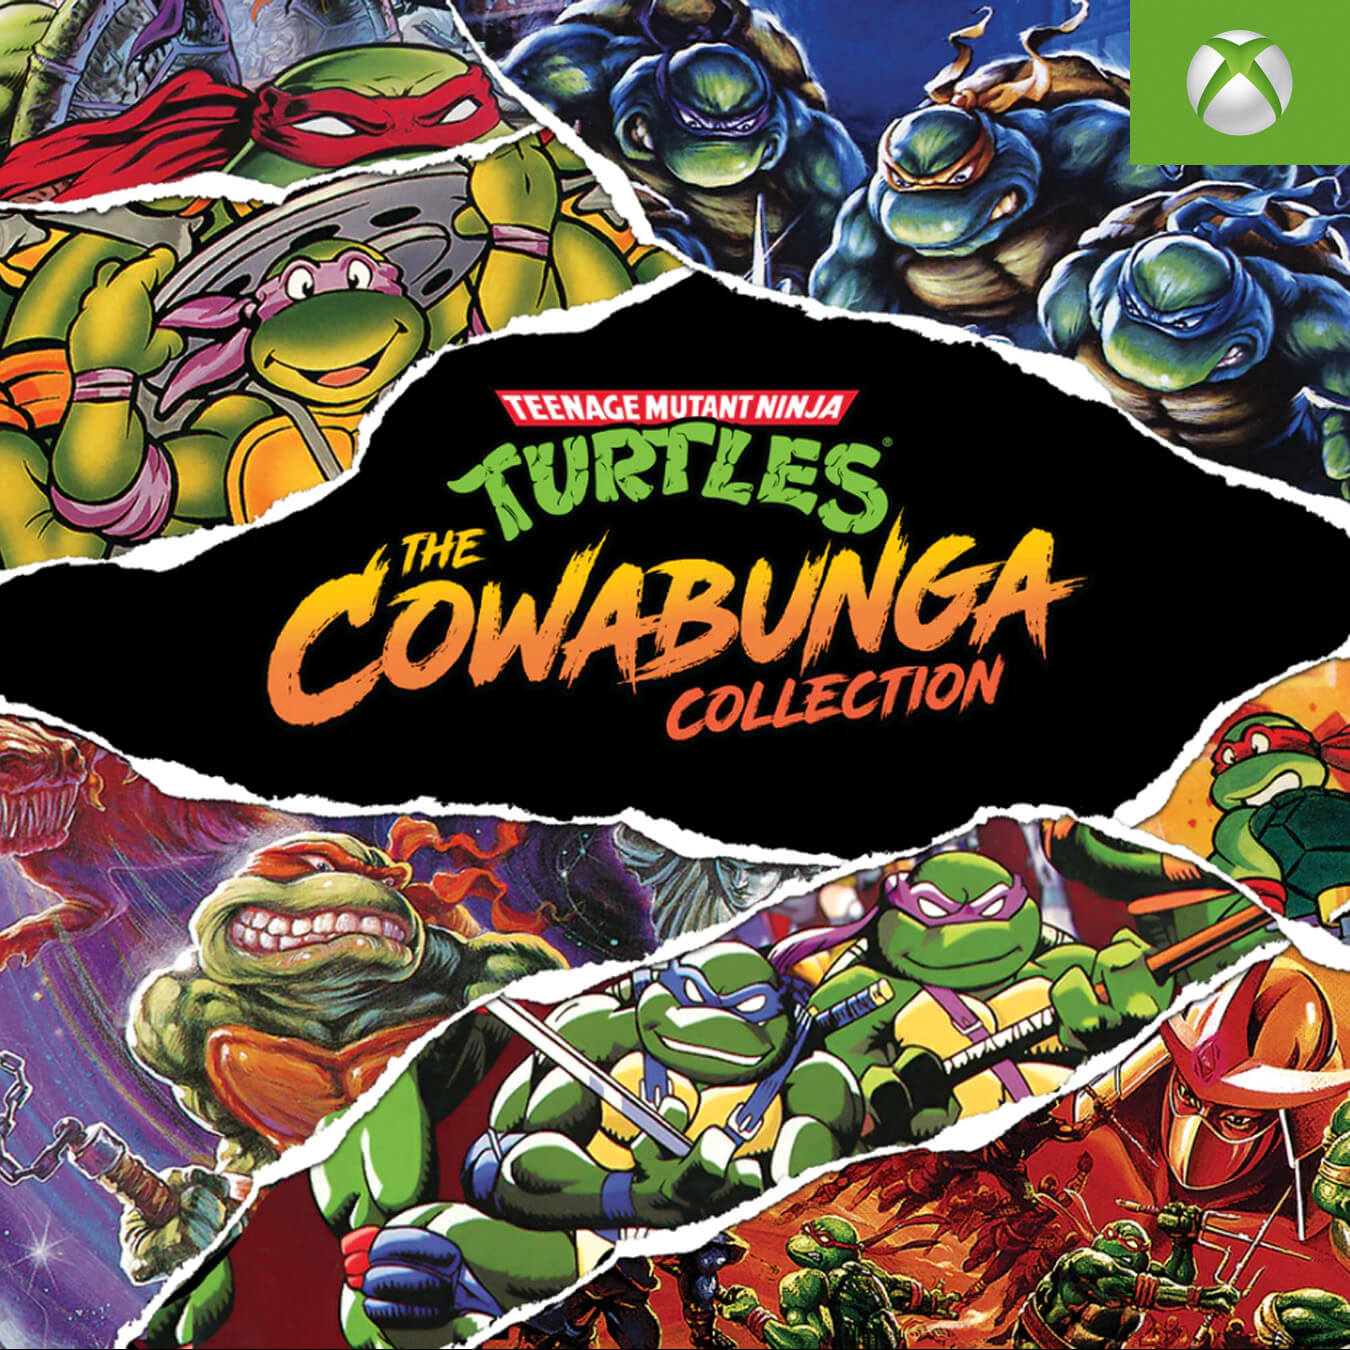 Turtles cowabunga collection. Teenage Mutant Ninja Turtles: the Cowabunga collection. TMNT Cowabunga collection ps4. Turtles the Cowabunga ps4. Игра teenage Mutant Ninja Turtles: the Cowabunga collection (ps4).